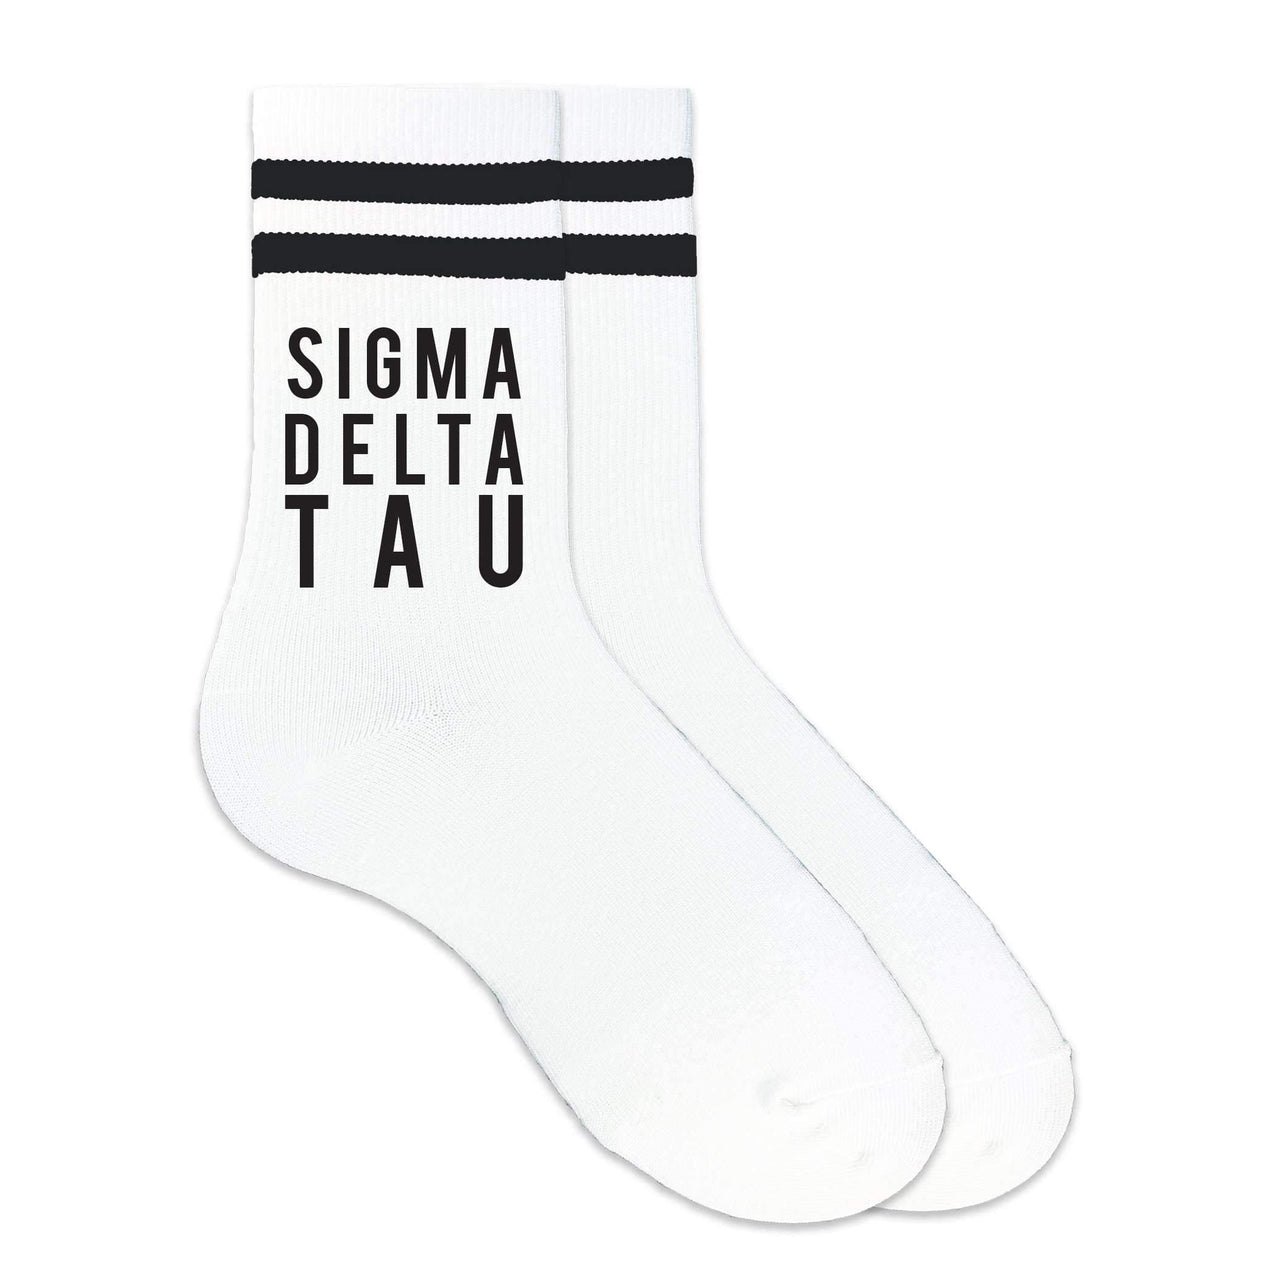 Sigma Delta Tau sorority custom printed on black striped crew socks